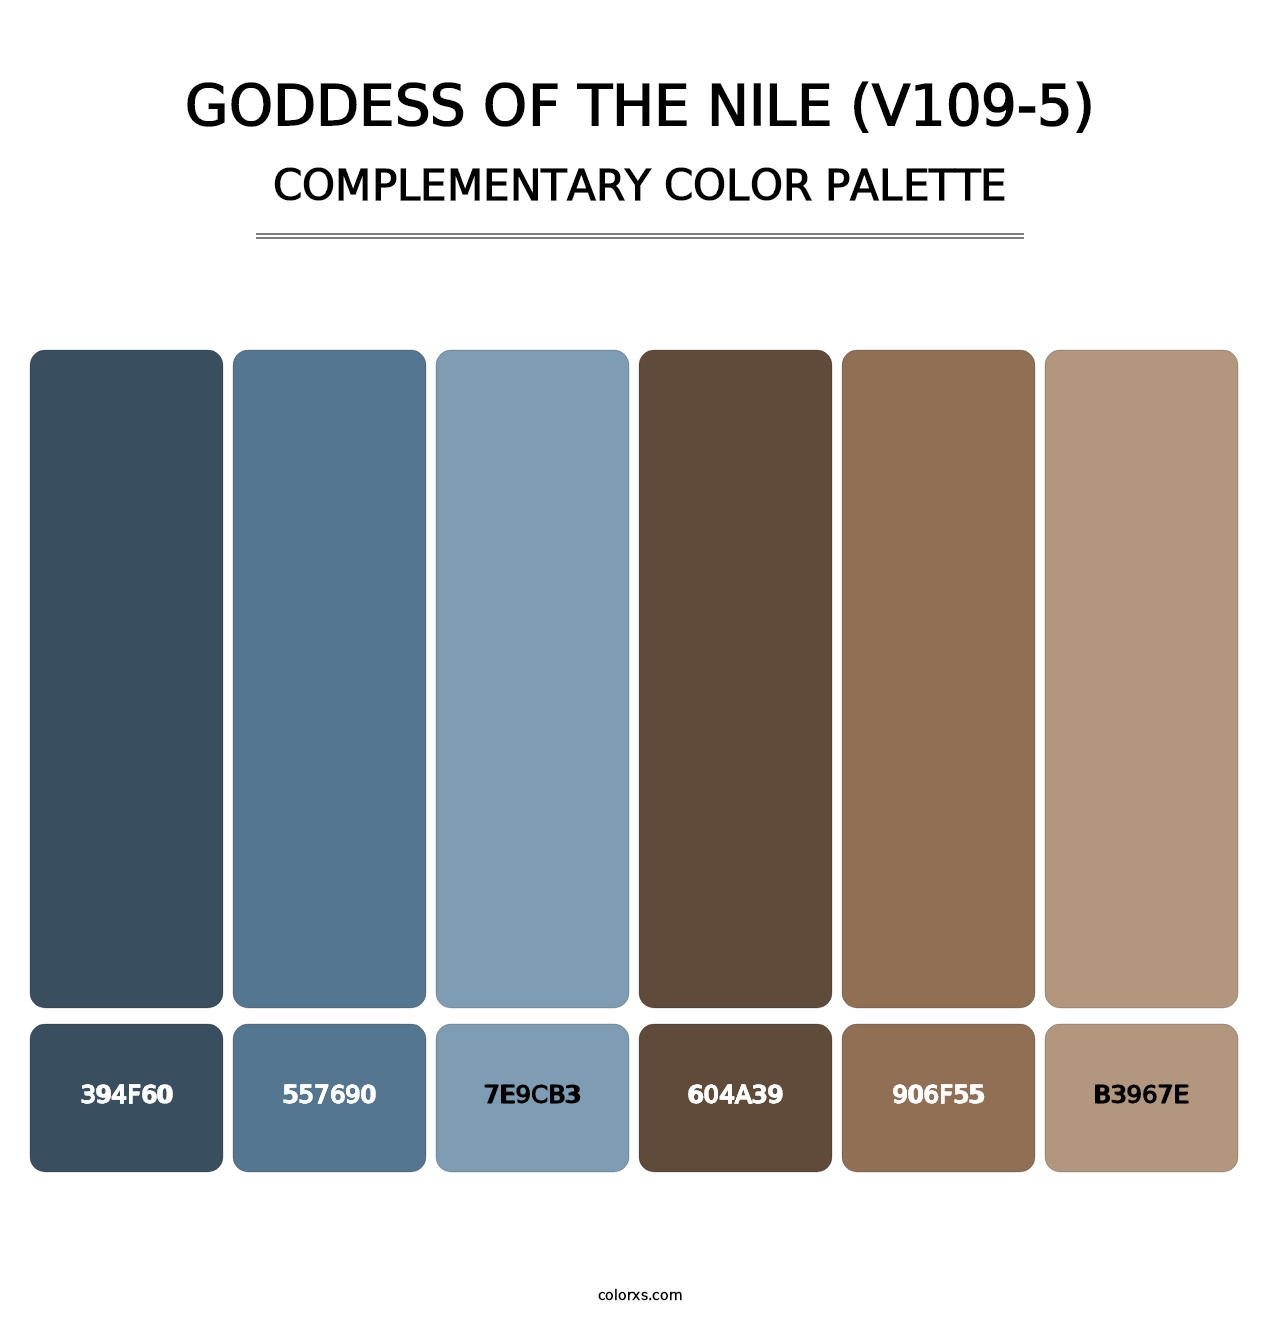 Goddess of the Nile (V109-5) - Complementary Color Palette